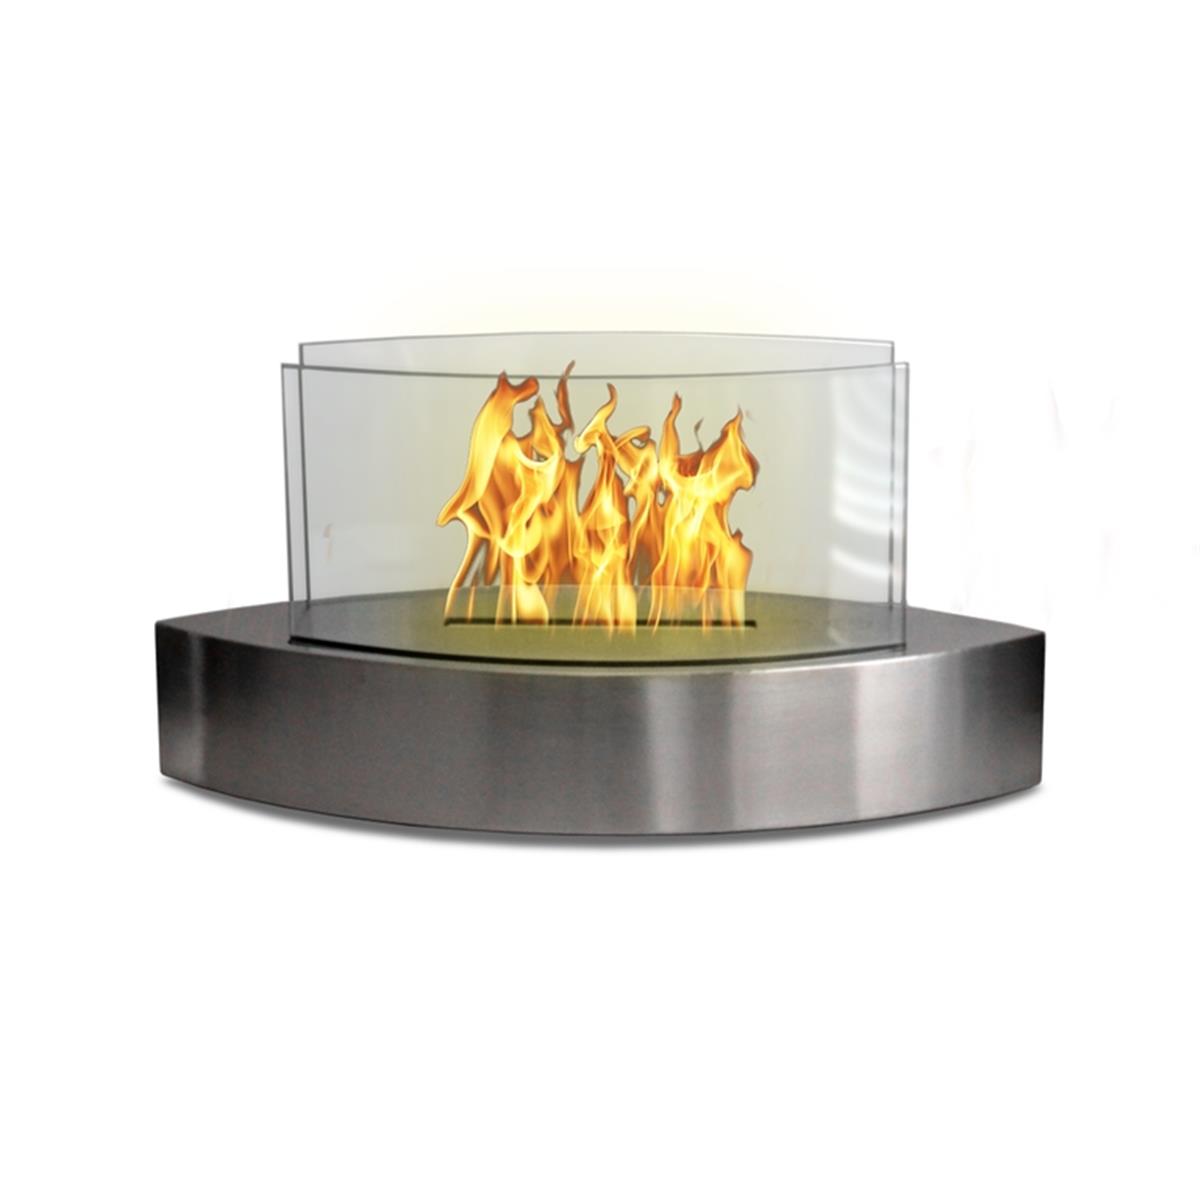 90217 Lexington Tabletop Bio-ethanol Fireplace - Stainless Steel